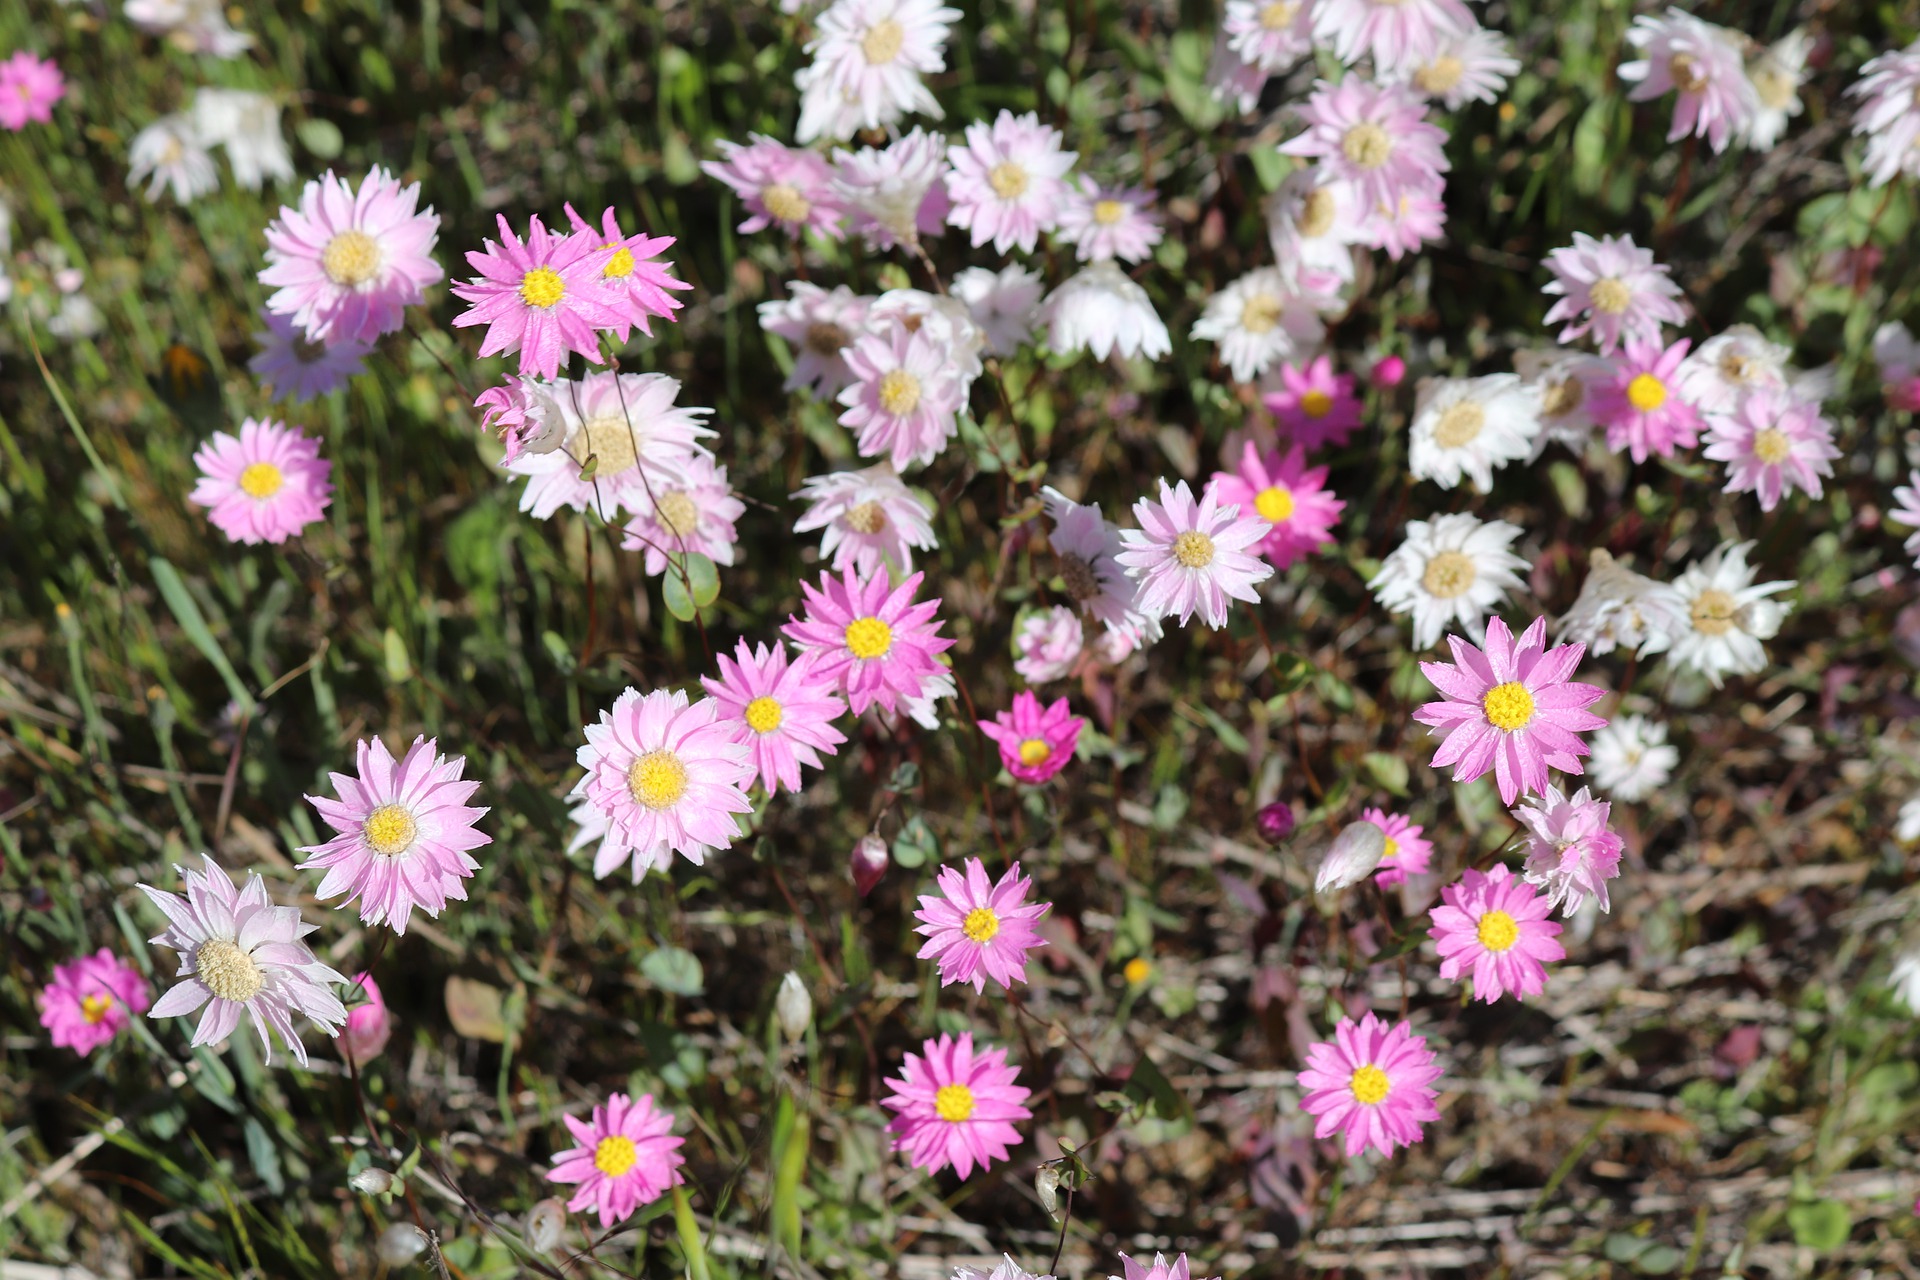 Local experts predicting a bumper wildflower season